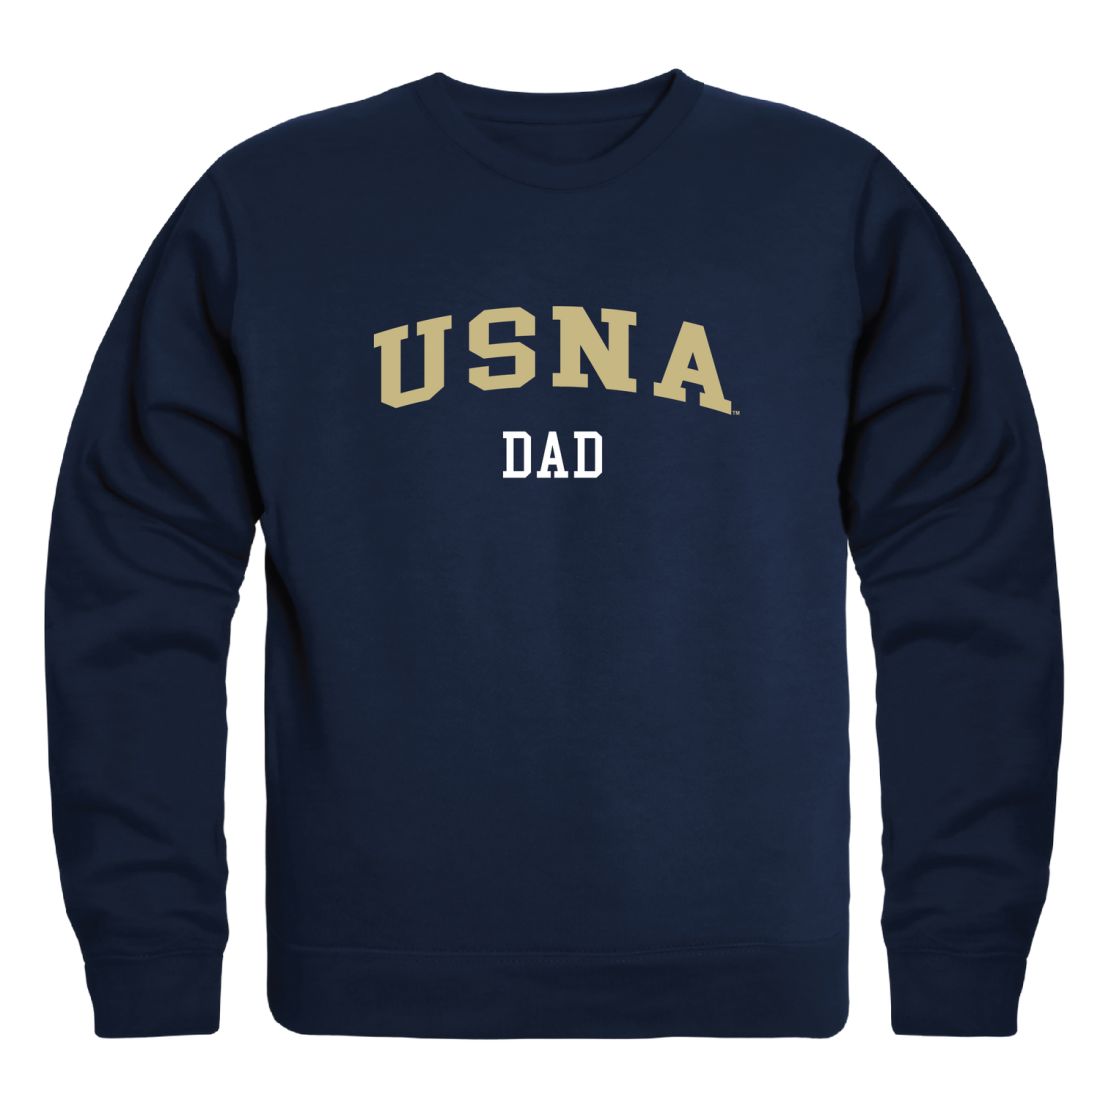 United States Naval Academy Midshipmen Dad Fleece Crewneck Pullover Sweatshirt